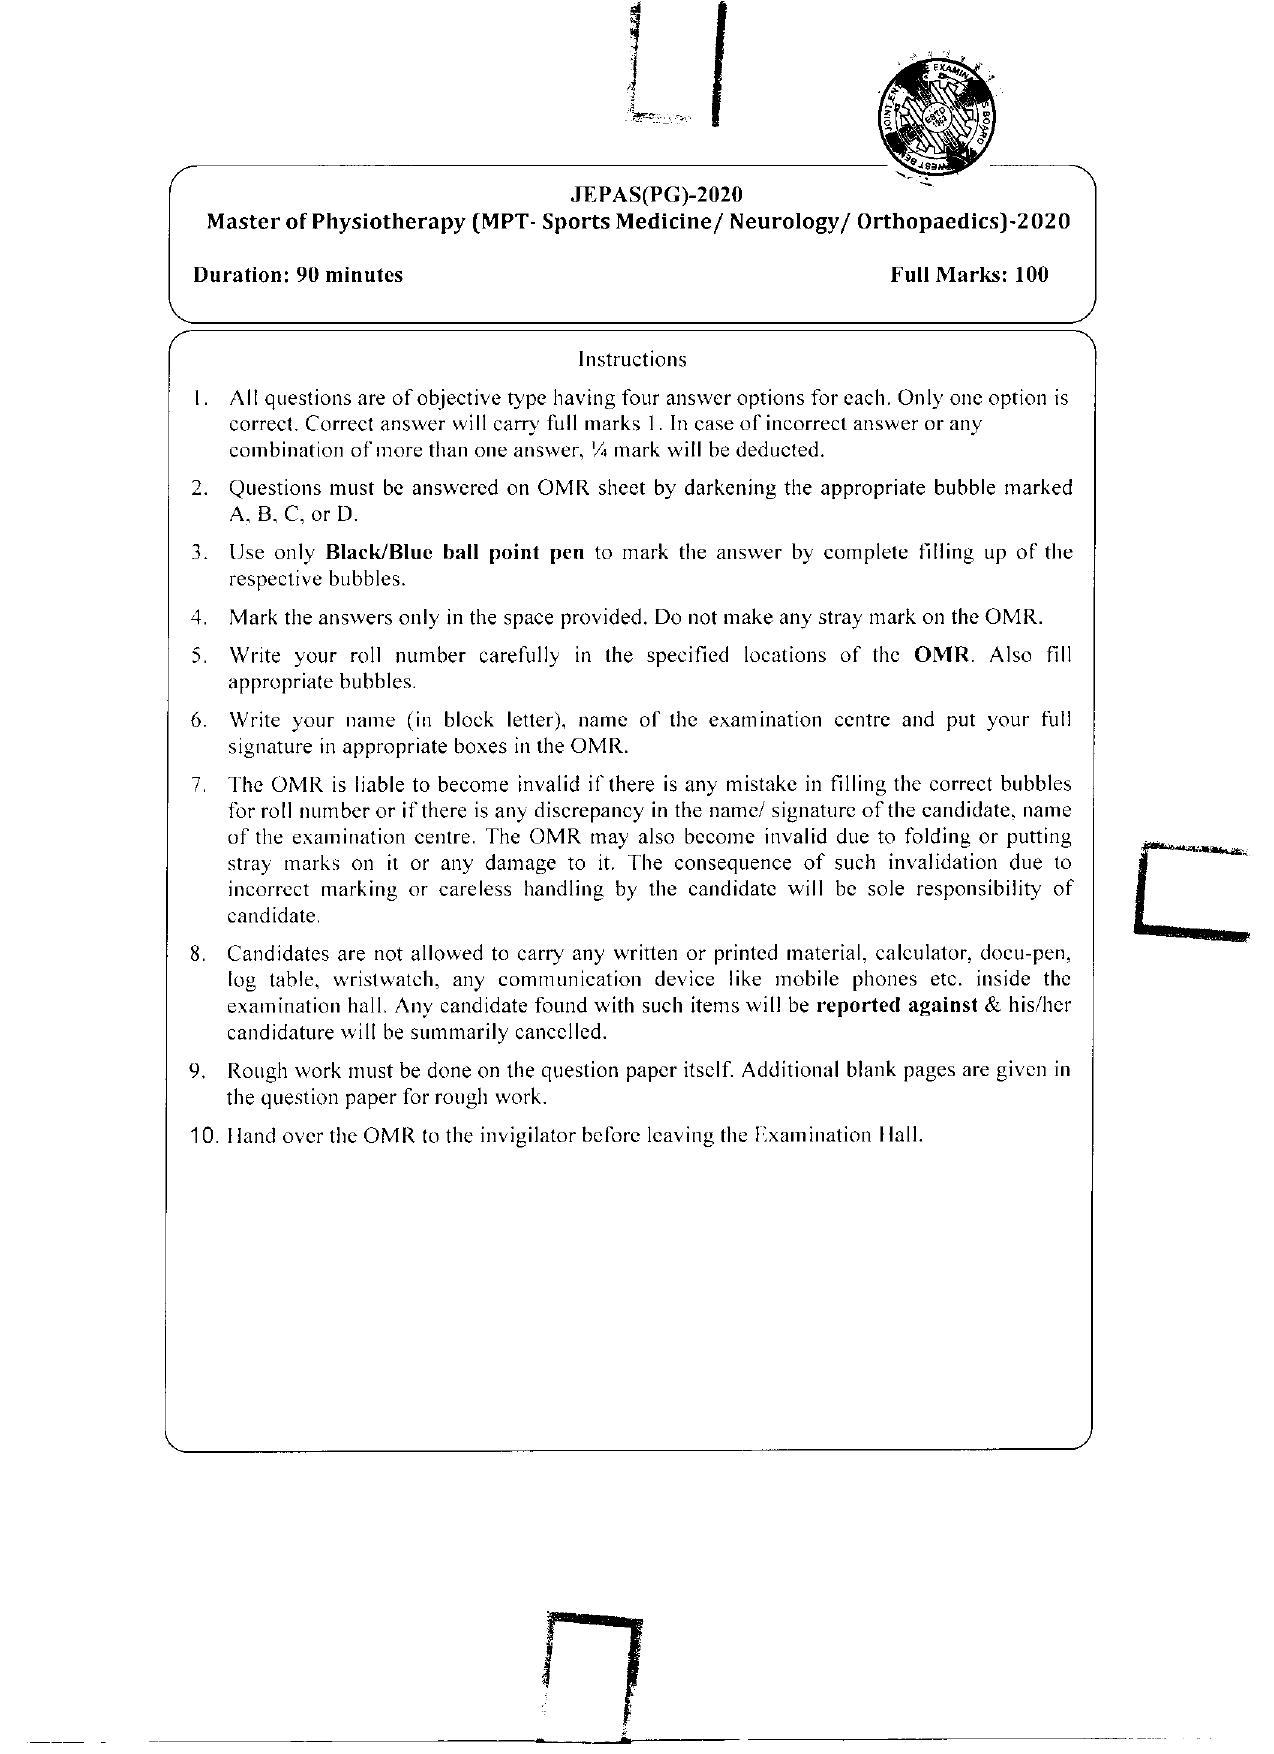 WBJEEB JEMAS (PG) 2020 MPT Question Paper - Page 1